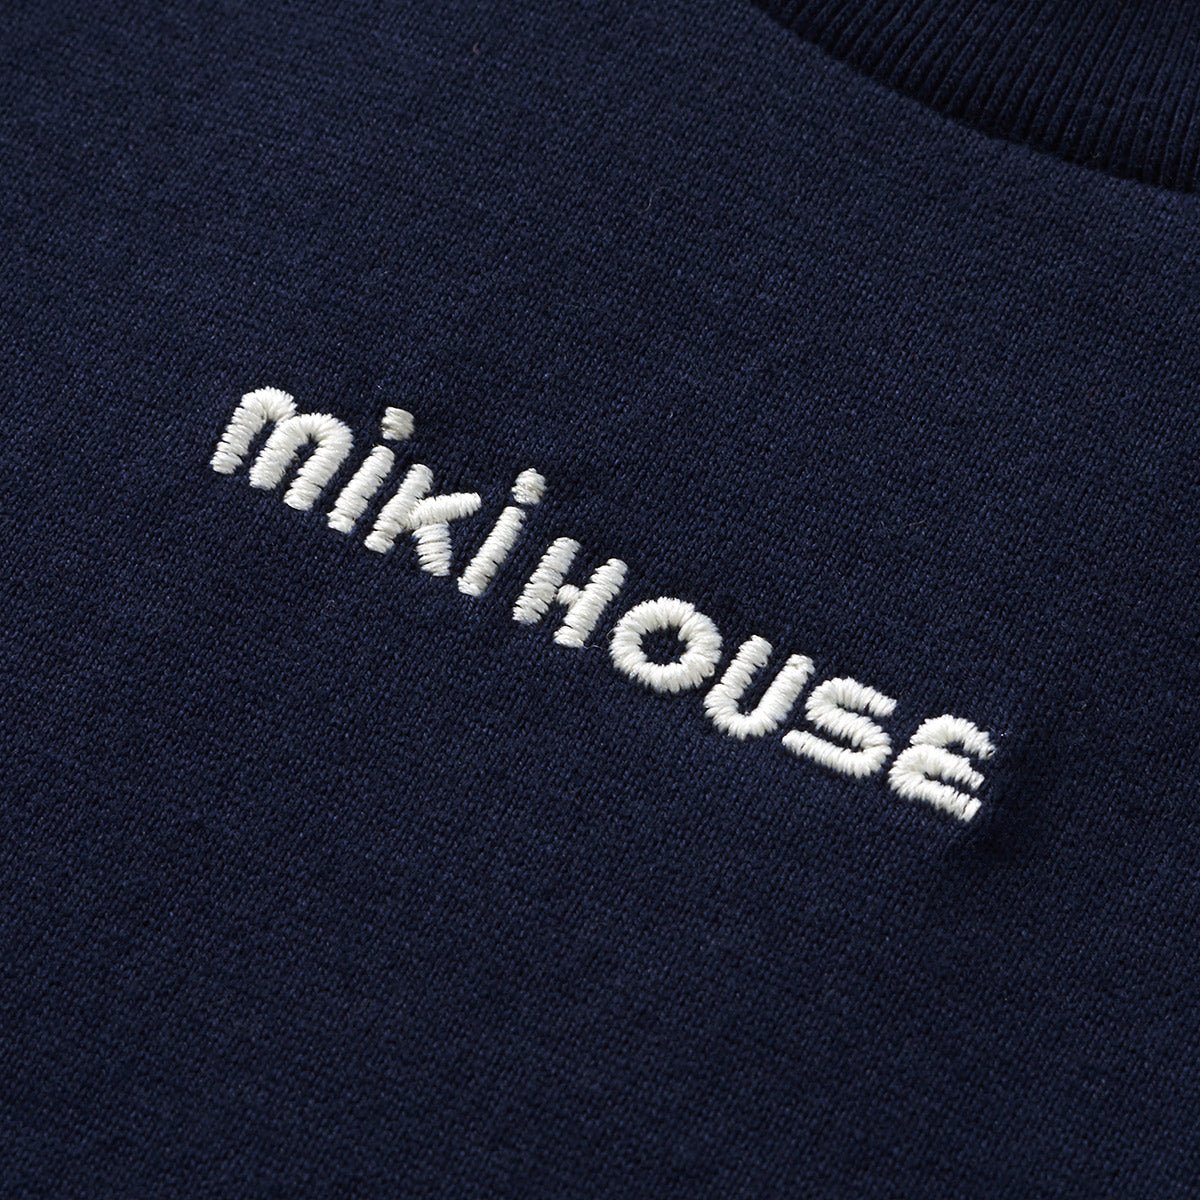 MIKI HOUSE Everyday Tee (Embroidery Logo) - 10-5203-452-03-80